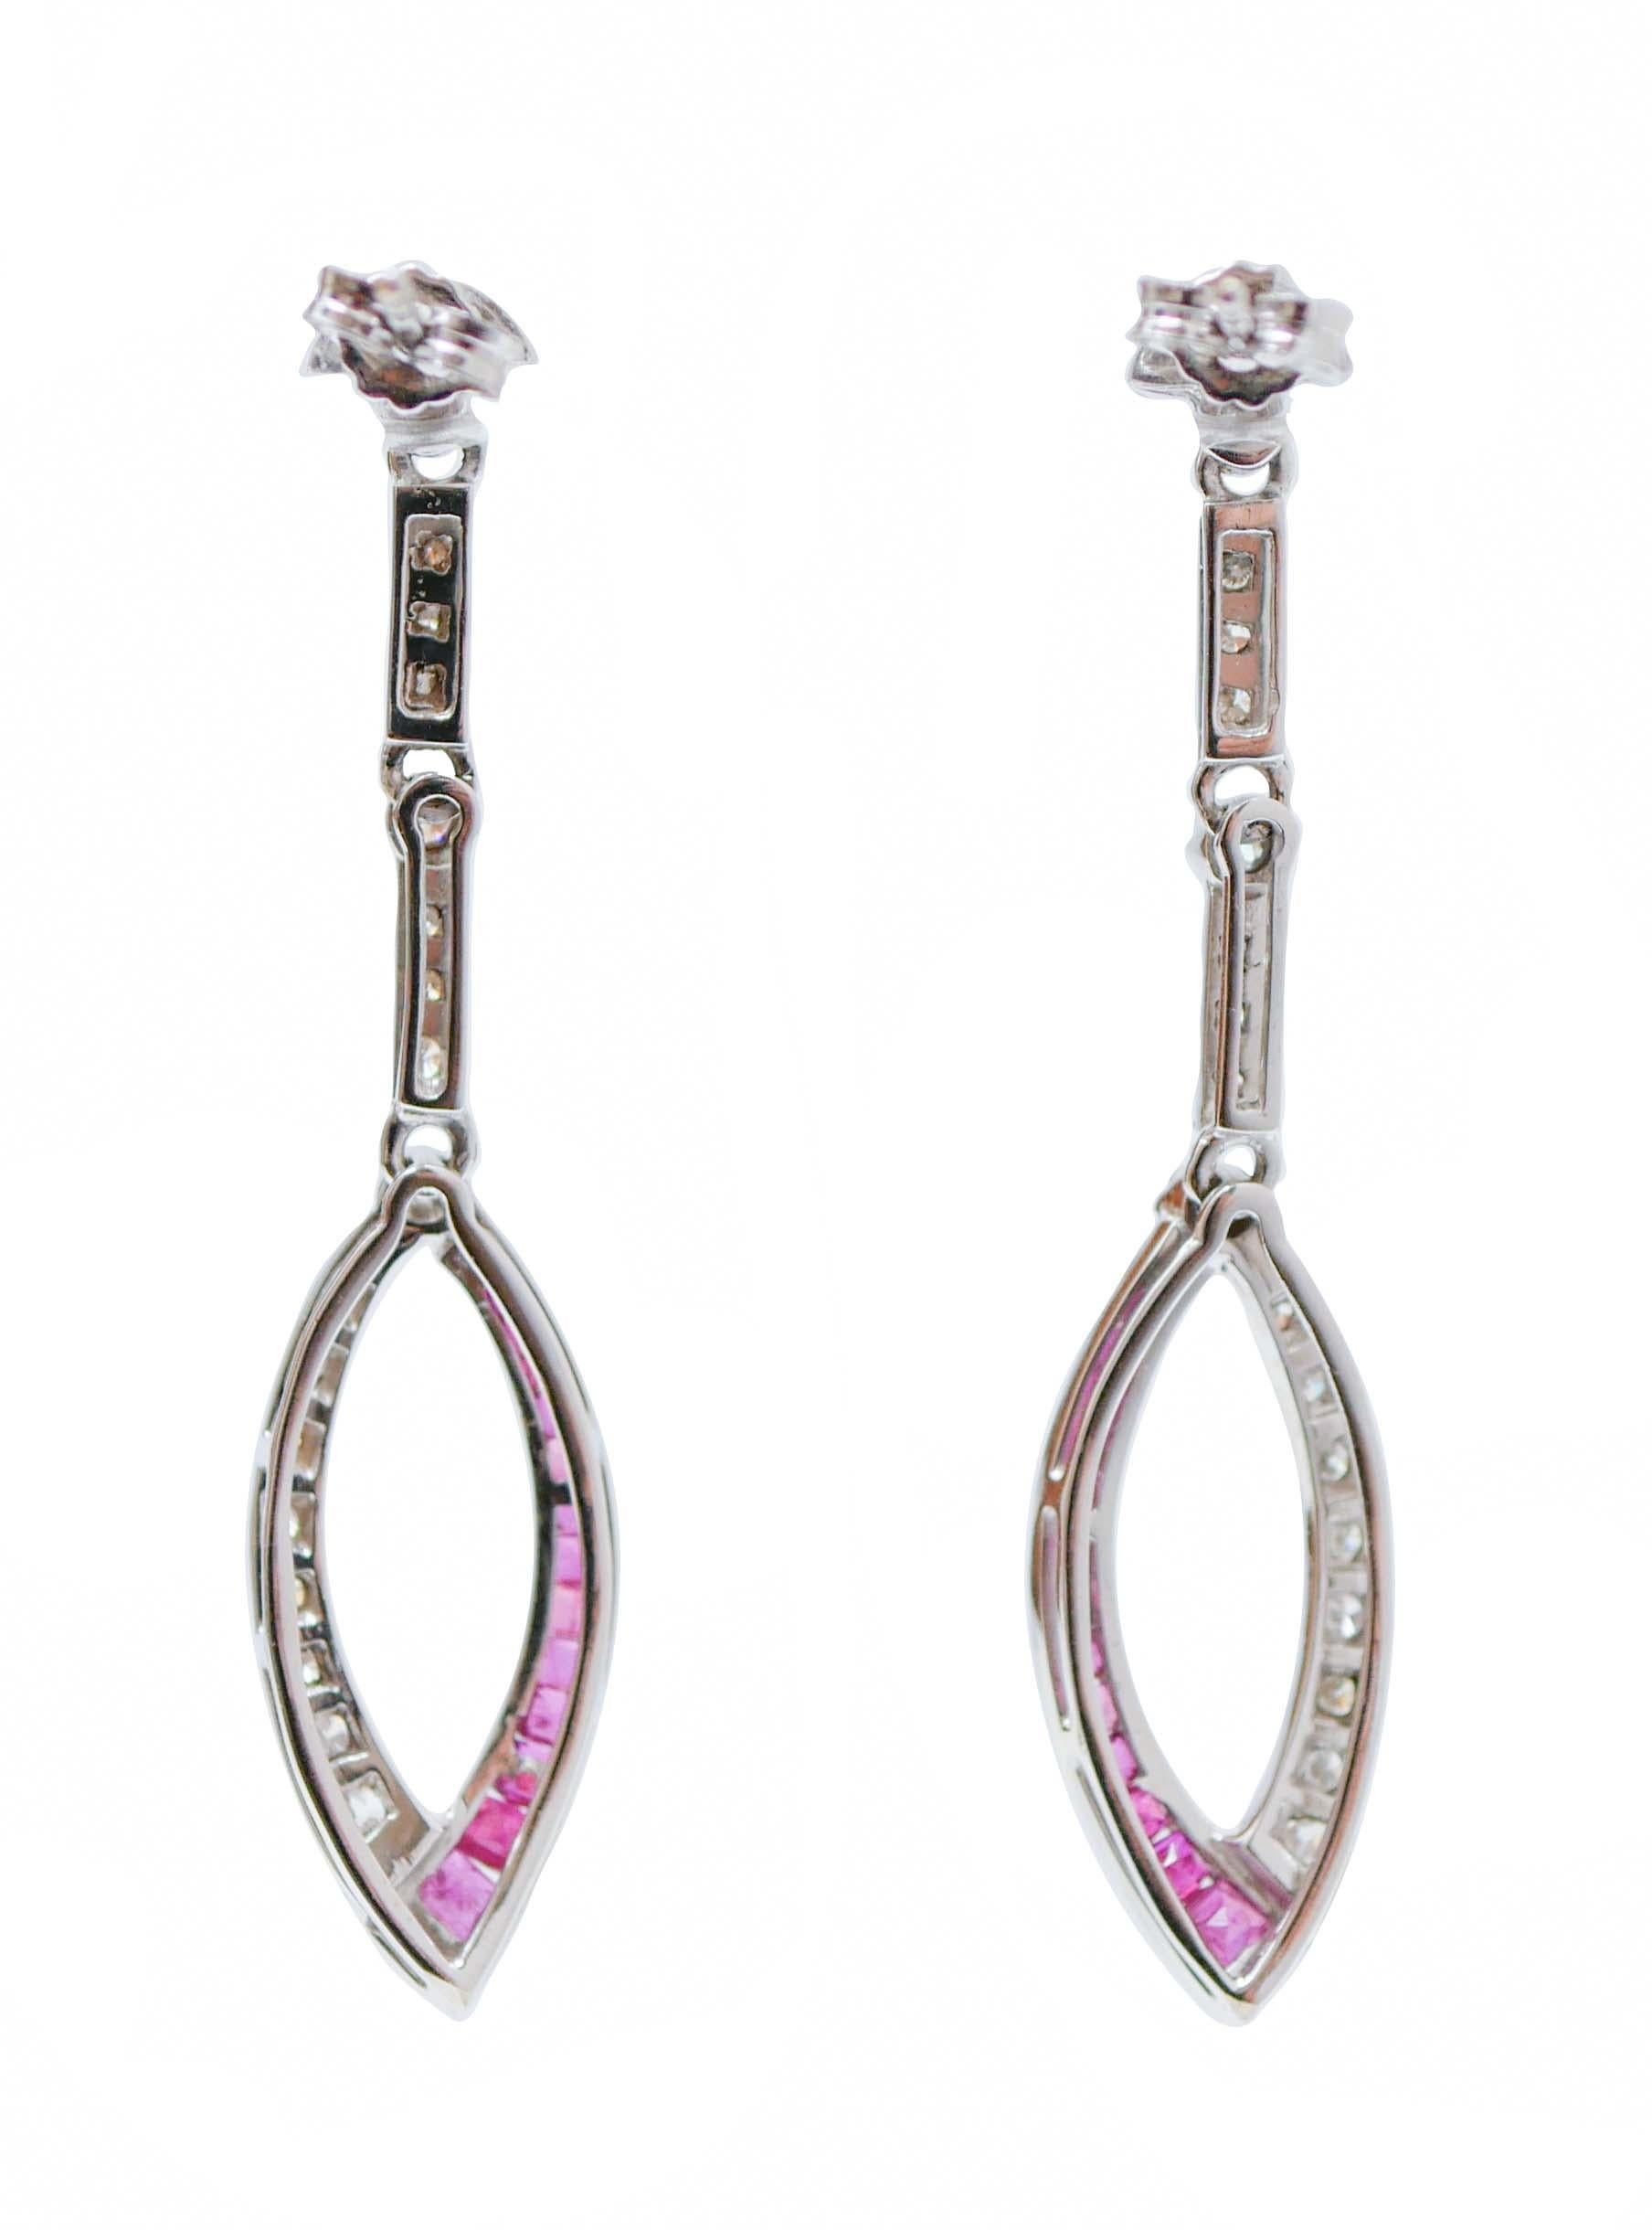 Retro Rubies, Diamonds, 14 Karat White Gold Dangle Earrings. For Sale